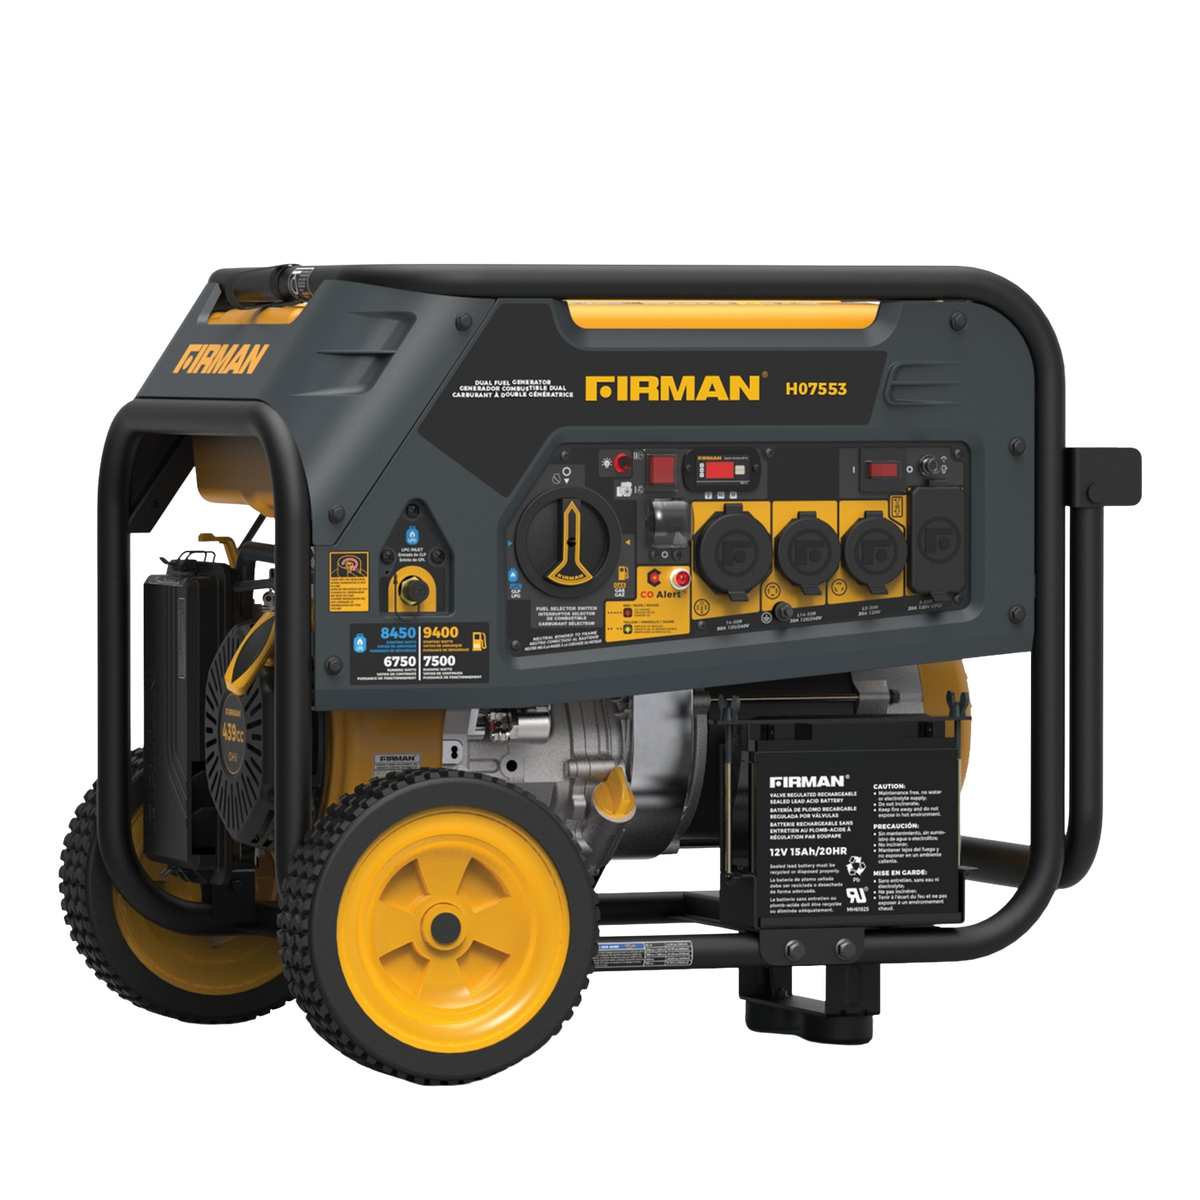 Firman H07553 Hybrid 7500W/9400W Electric Start Dual Fuel Gas Propane Generator Manufacturer RFB